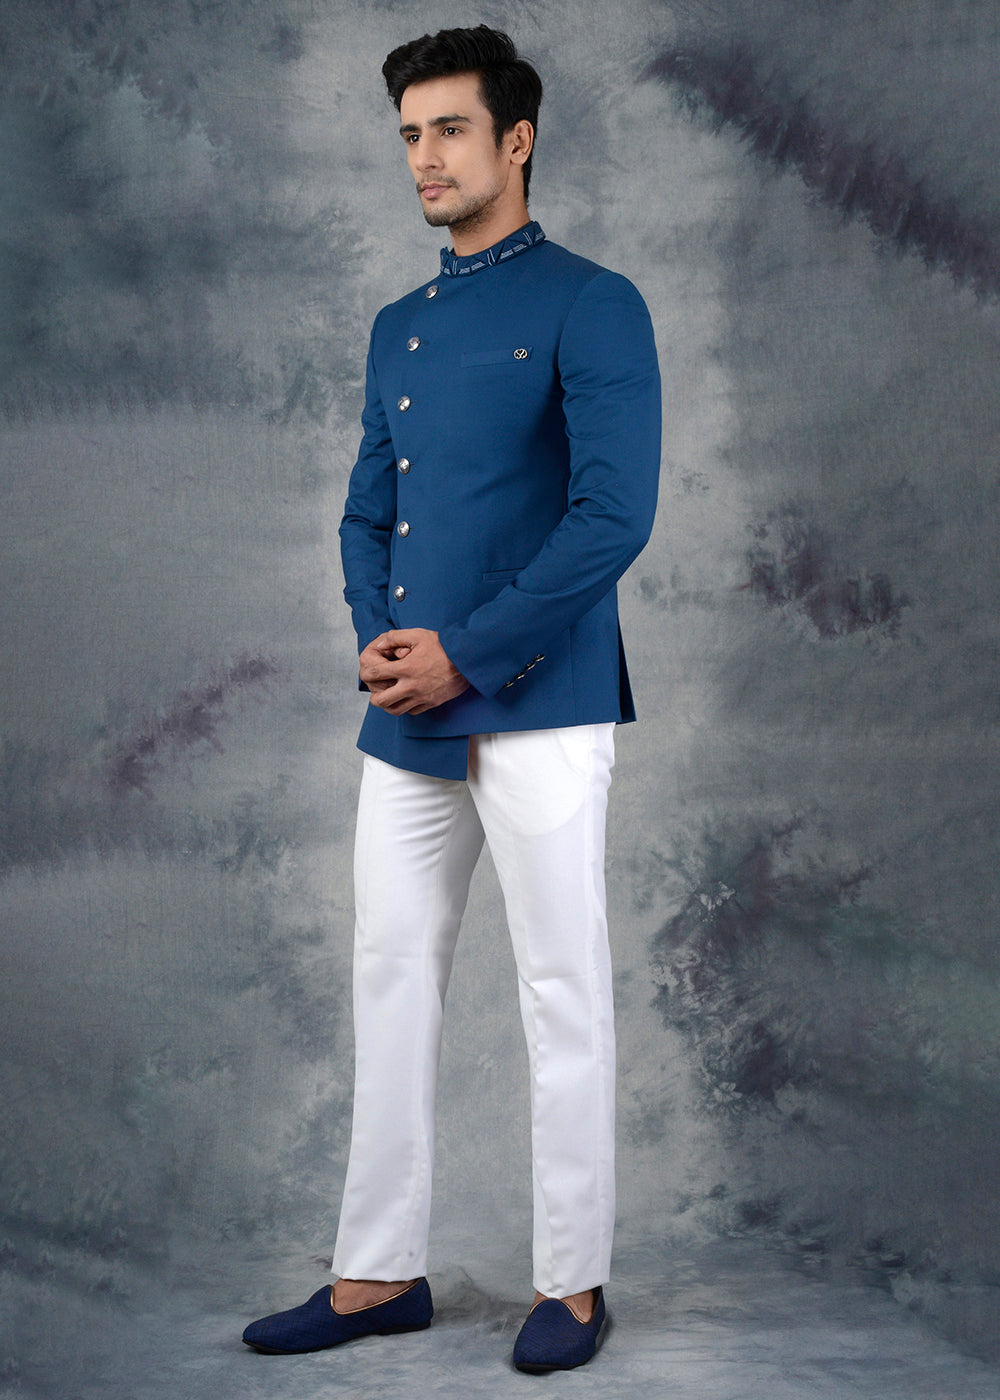 Designertailor Indian Ethnic Designer Party Wear Jodhpuri Coat Pant for Men  Wedding Suit Royal Indo Western Coat for Men - Etsy